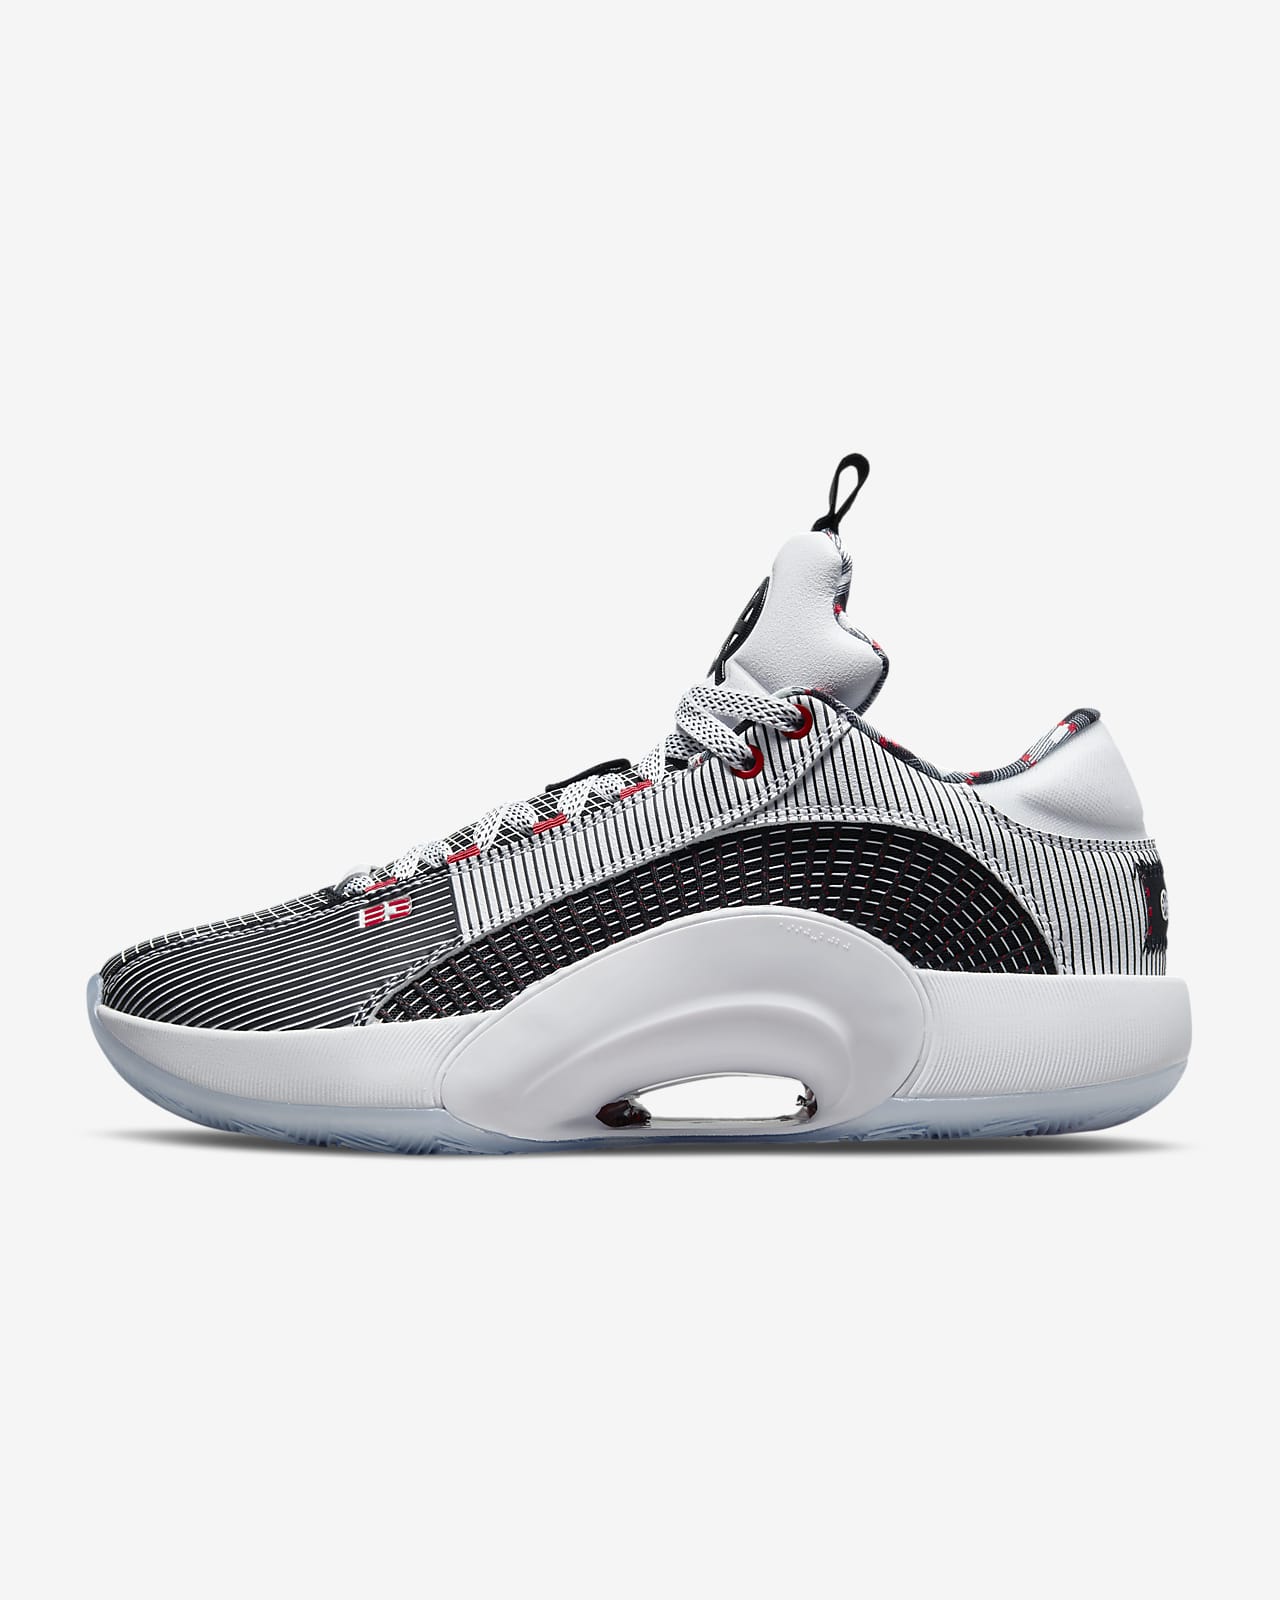 Air Jordan XXXV Low Quai 54 Basketball Shoe